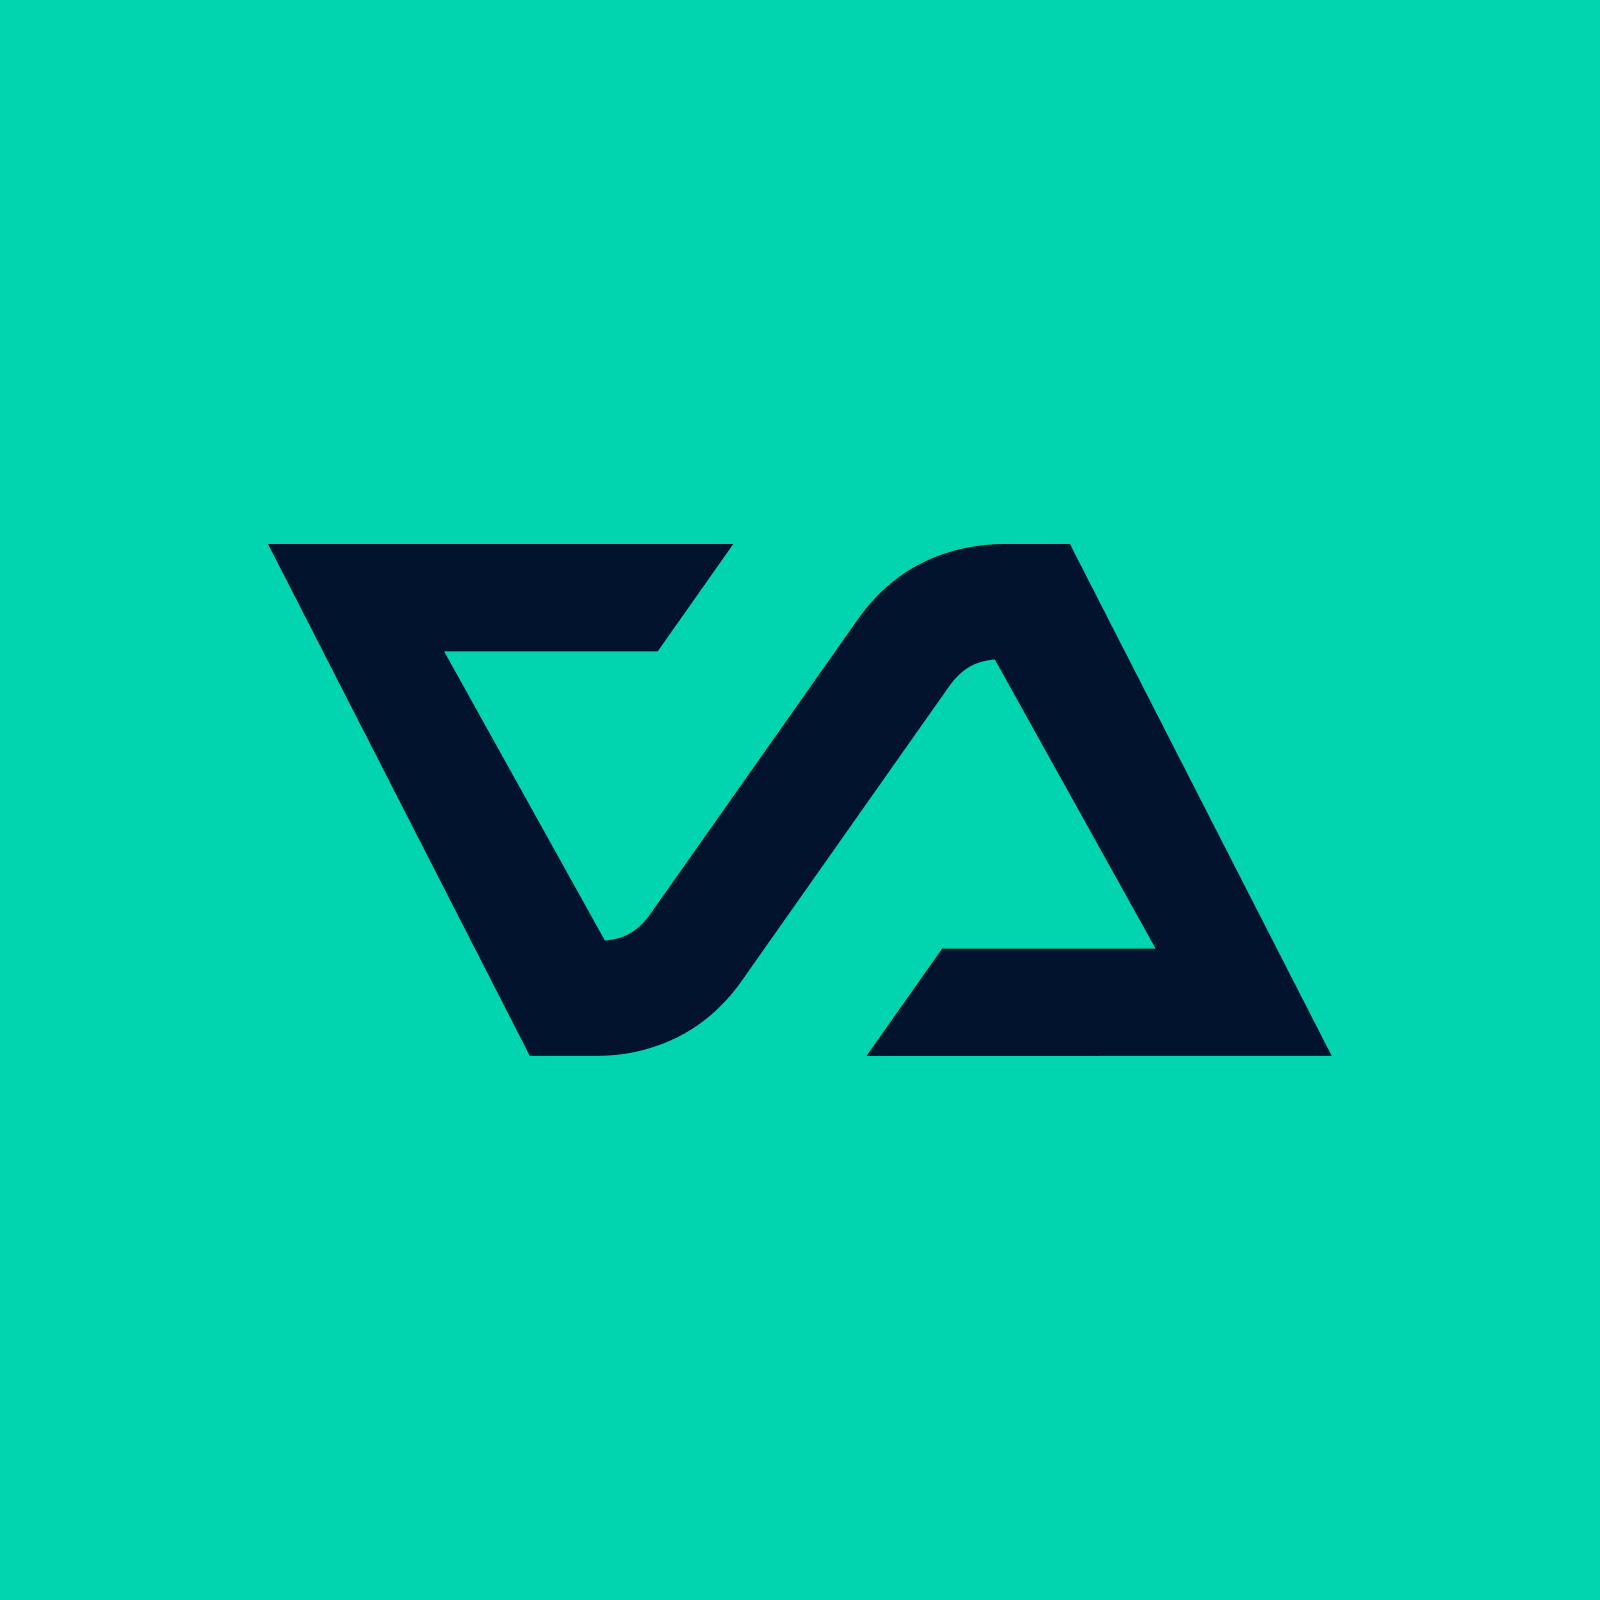 Vazco logo